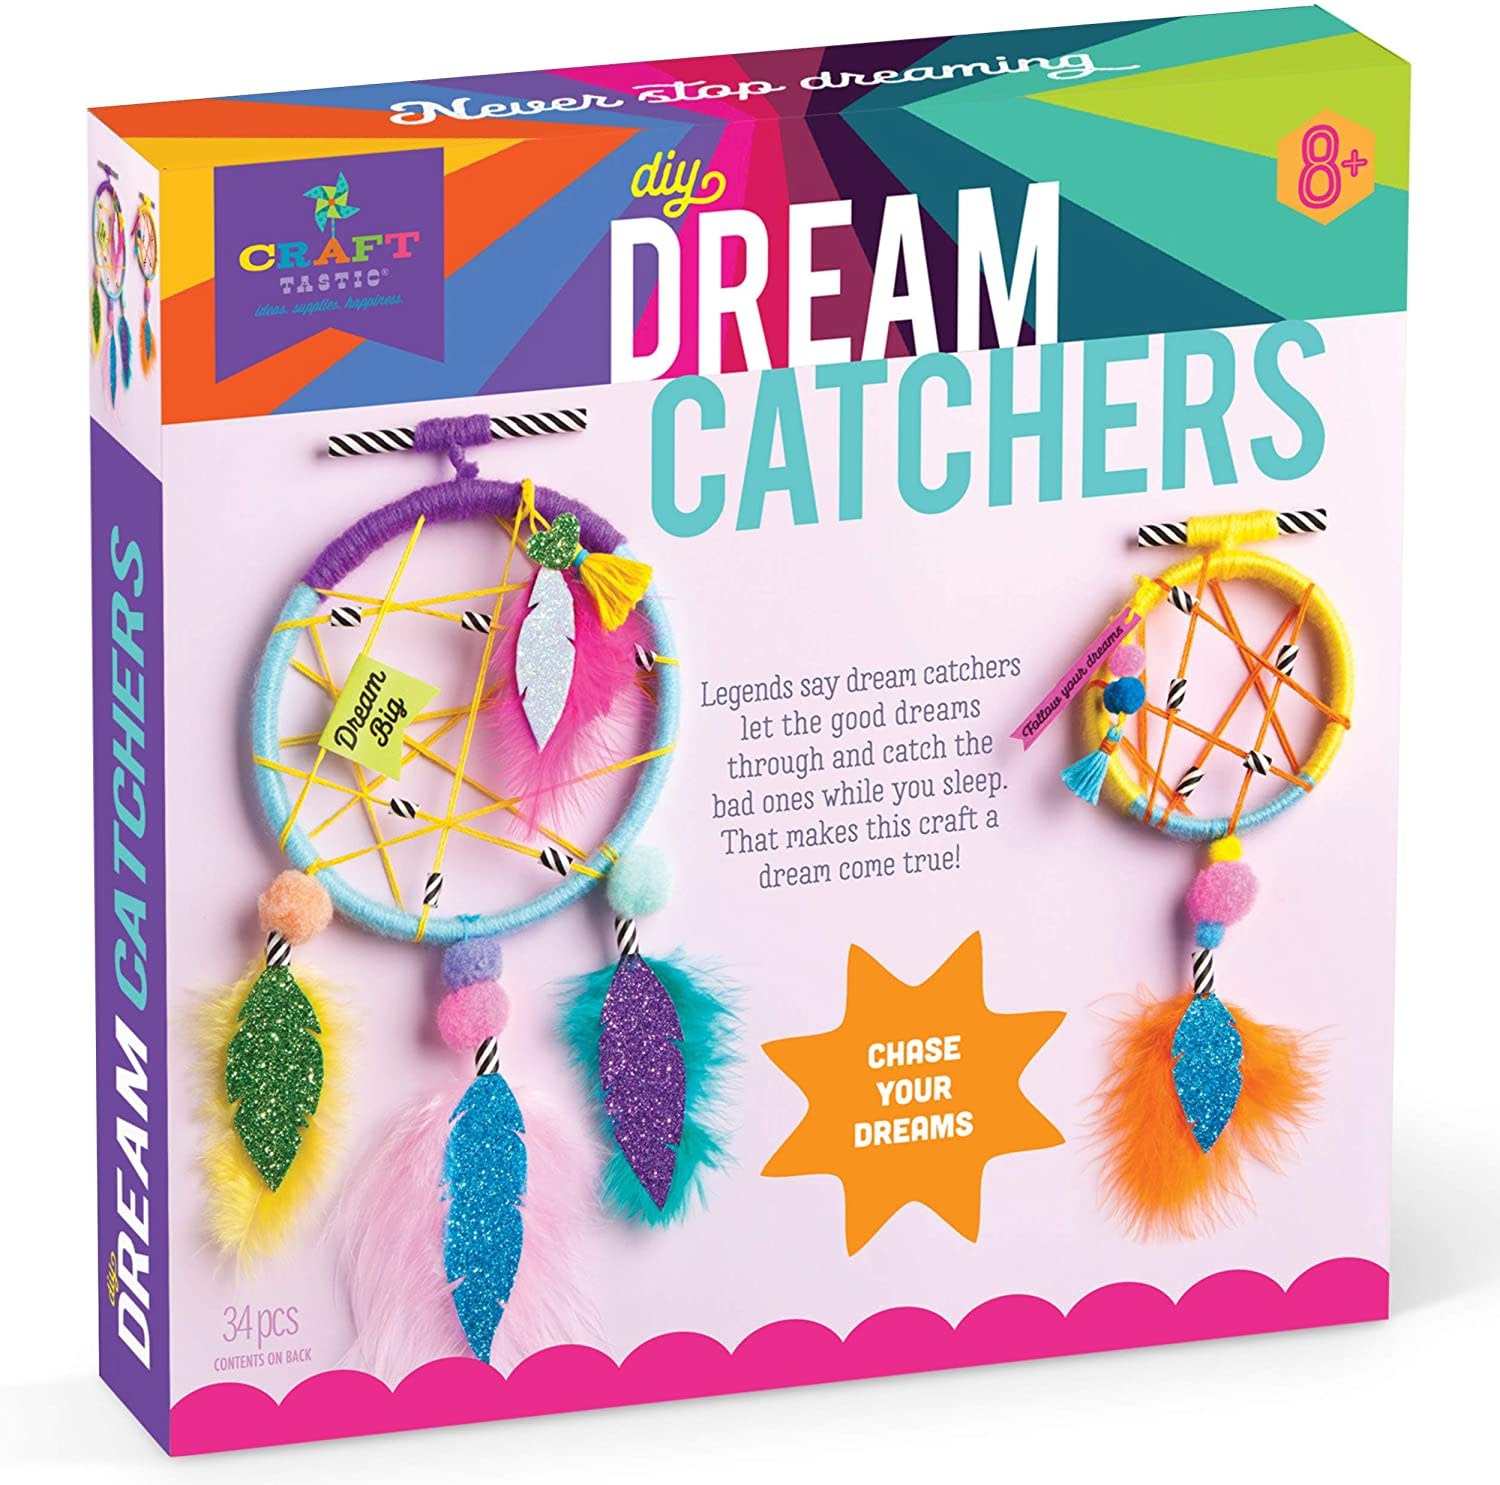 Unicorn Dream Catcher Kit from Ann Williams Group - School Crossing